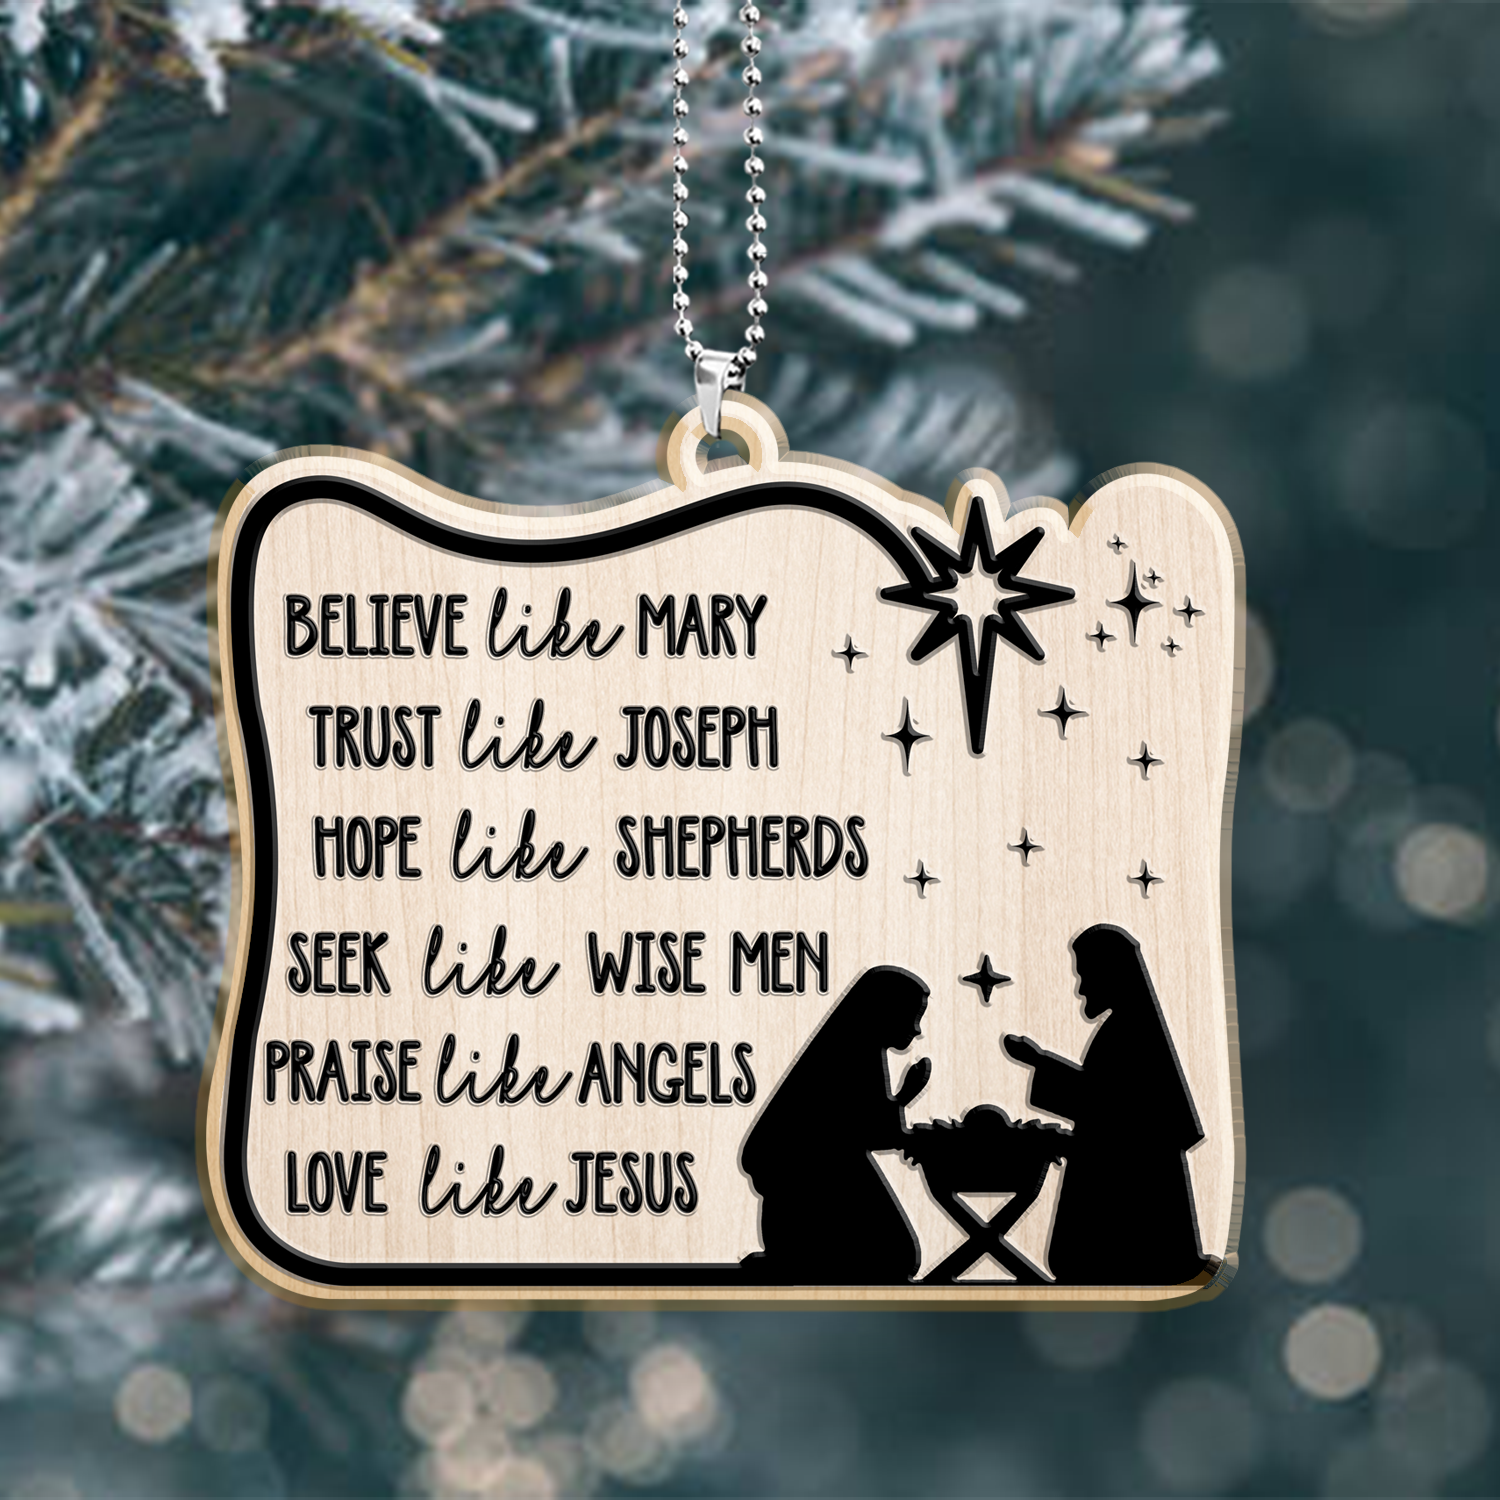 Engraved Wood Ornament Believe Like Mary, Trust Like Joseph, Hope Like Shepherds, Seek Like Wise Men, Love Like Jesus Ornament